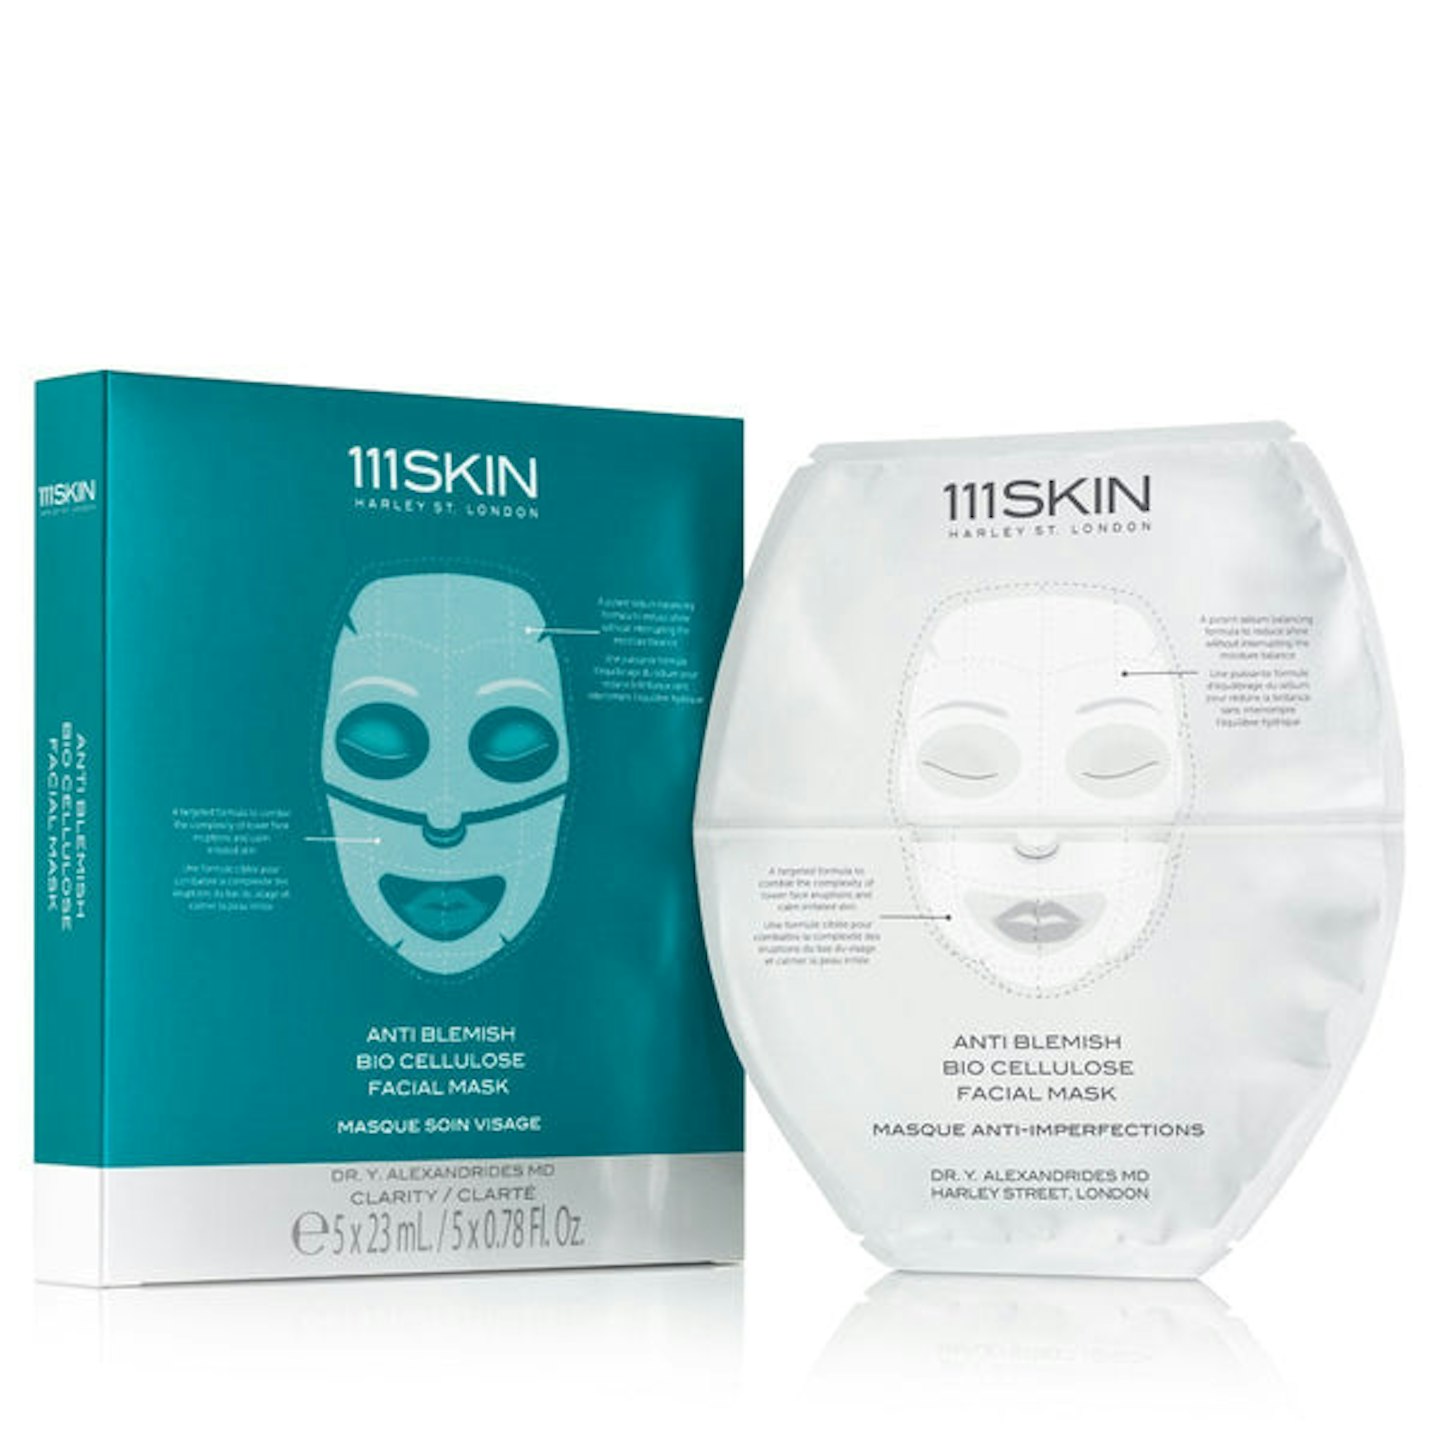 Wednesday – 111Skin, Anti-Blemish Bio Cellulose Face Mask, £20